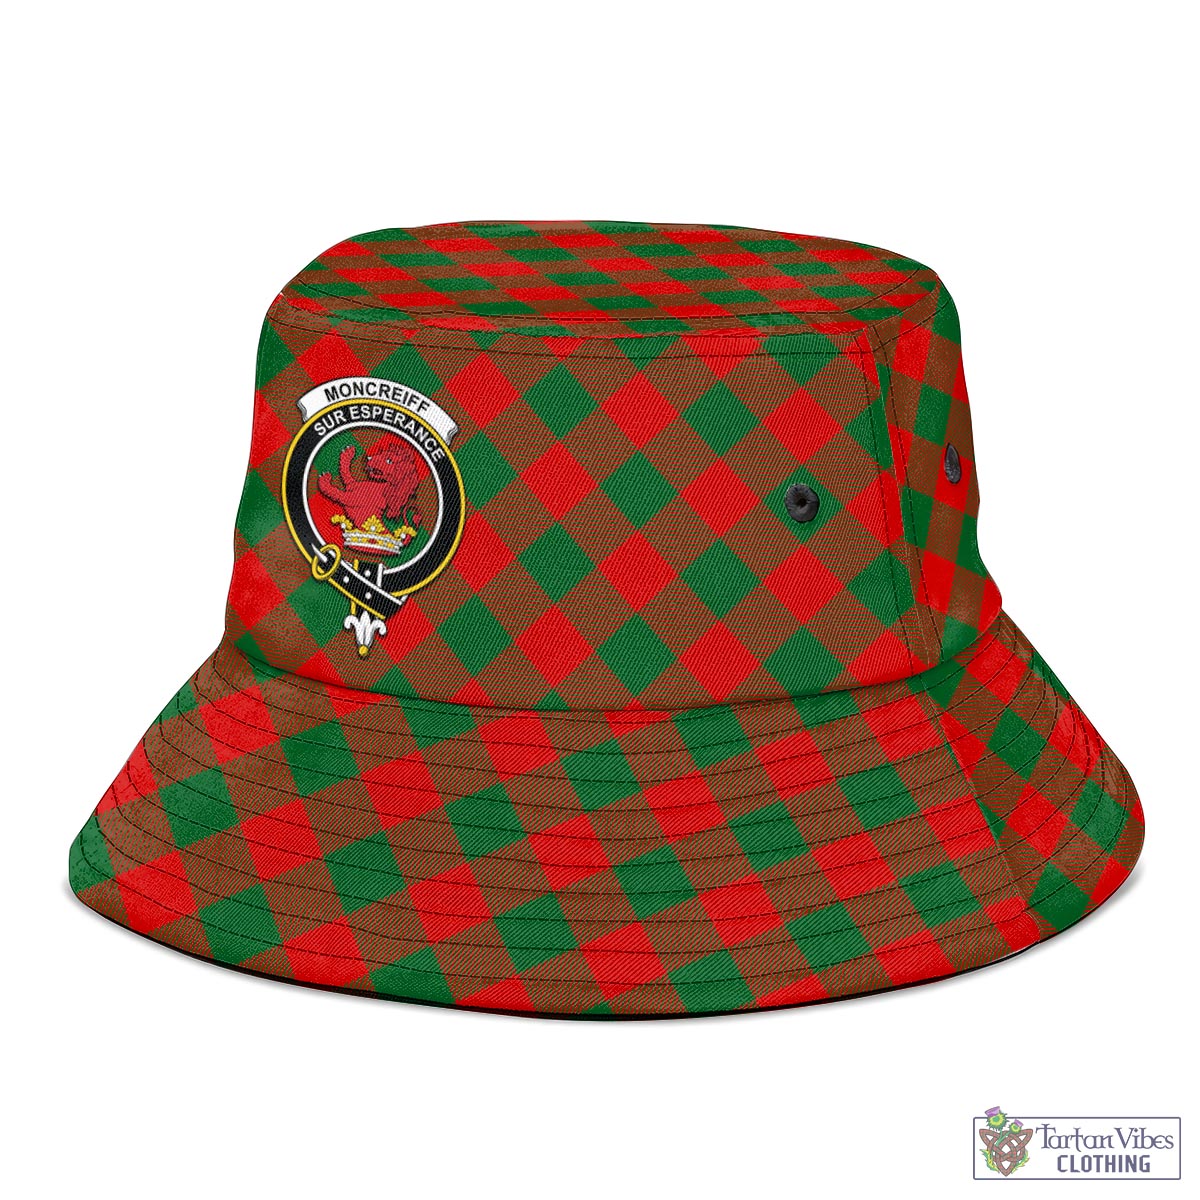 Tartan Vibes Clothing Moncrieff Modern Tartan Bucket Hat with Family Crest